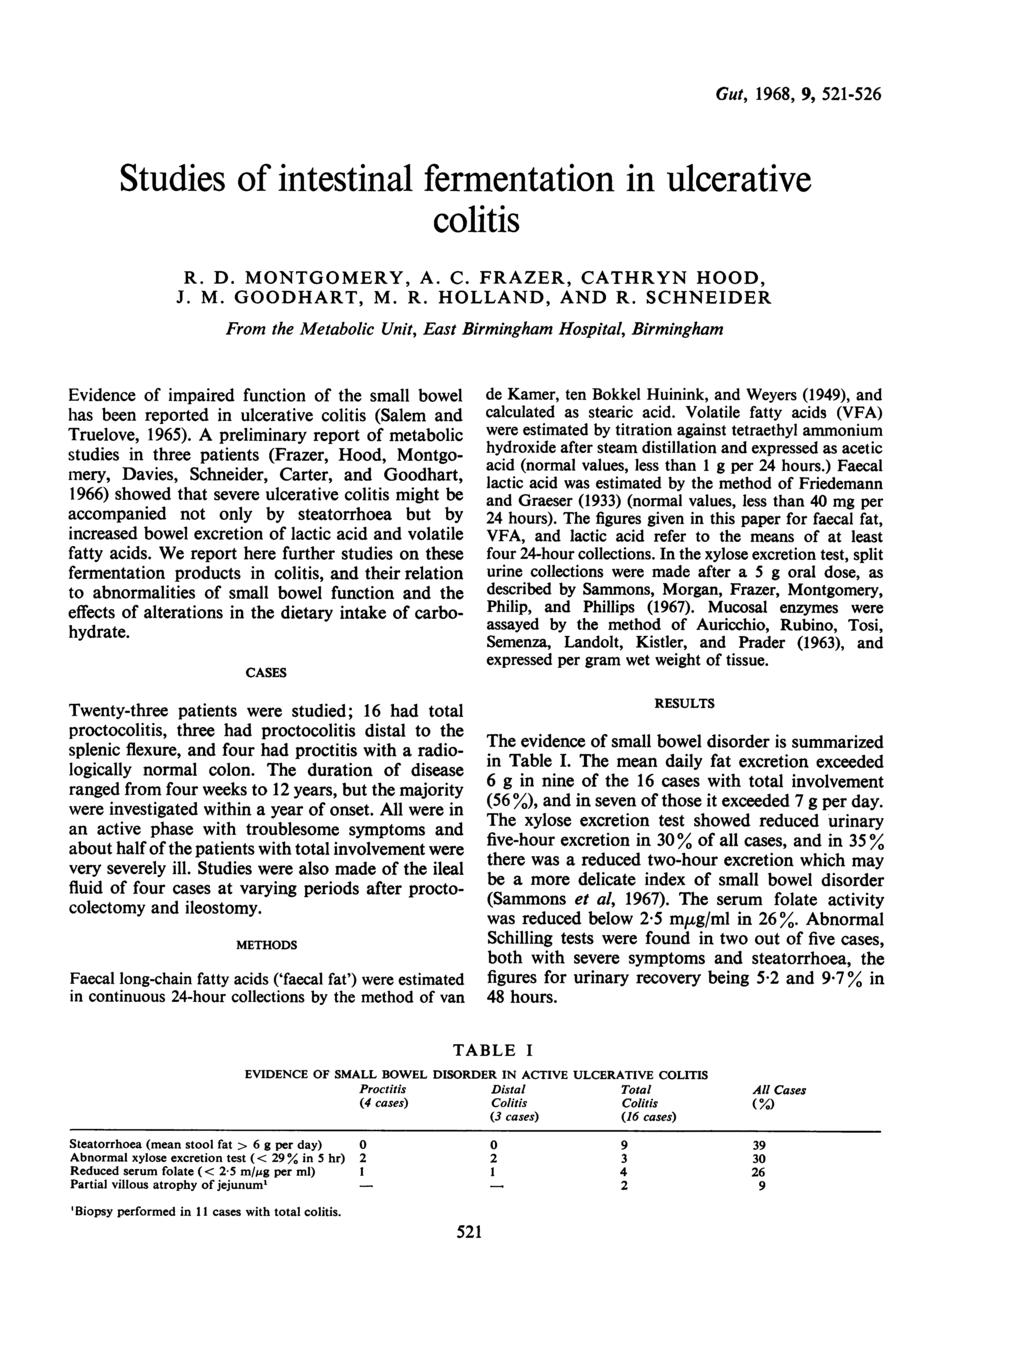 Gut, 1968, 9, 51-56 Studies of intestinal fermentation in ulcerative colitis R. D. MONTGOMERY, A. C. FRAZER, CATHRYN HOOD, J. M. GOODHART, M. R. HOLLAND, AND R.